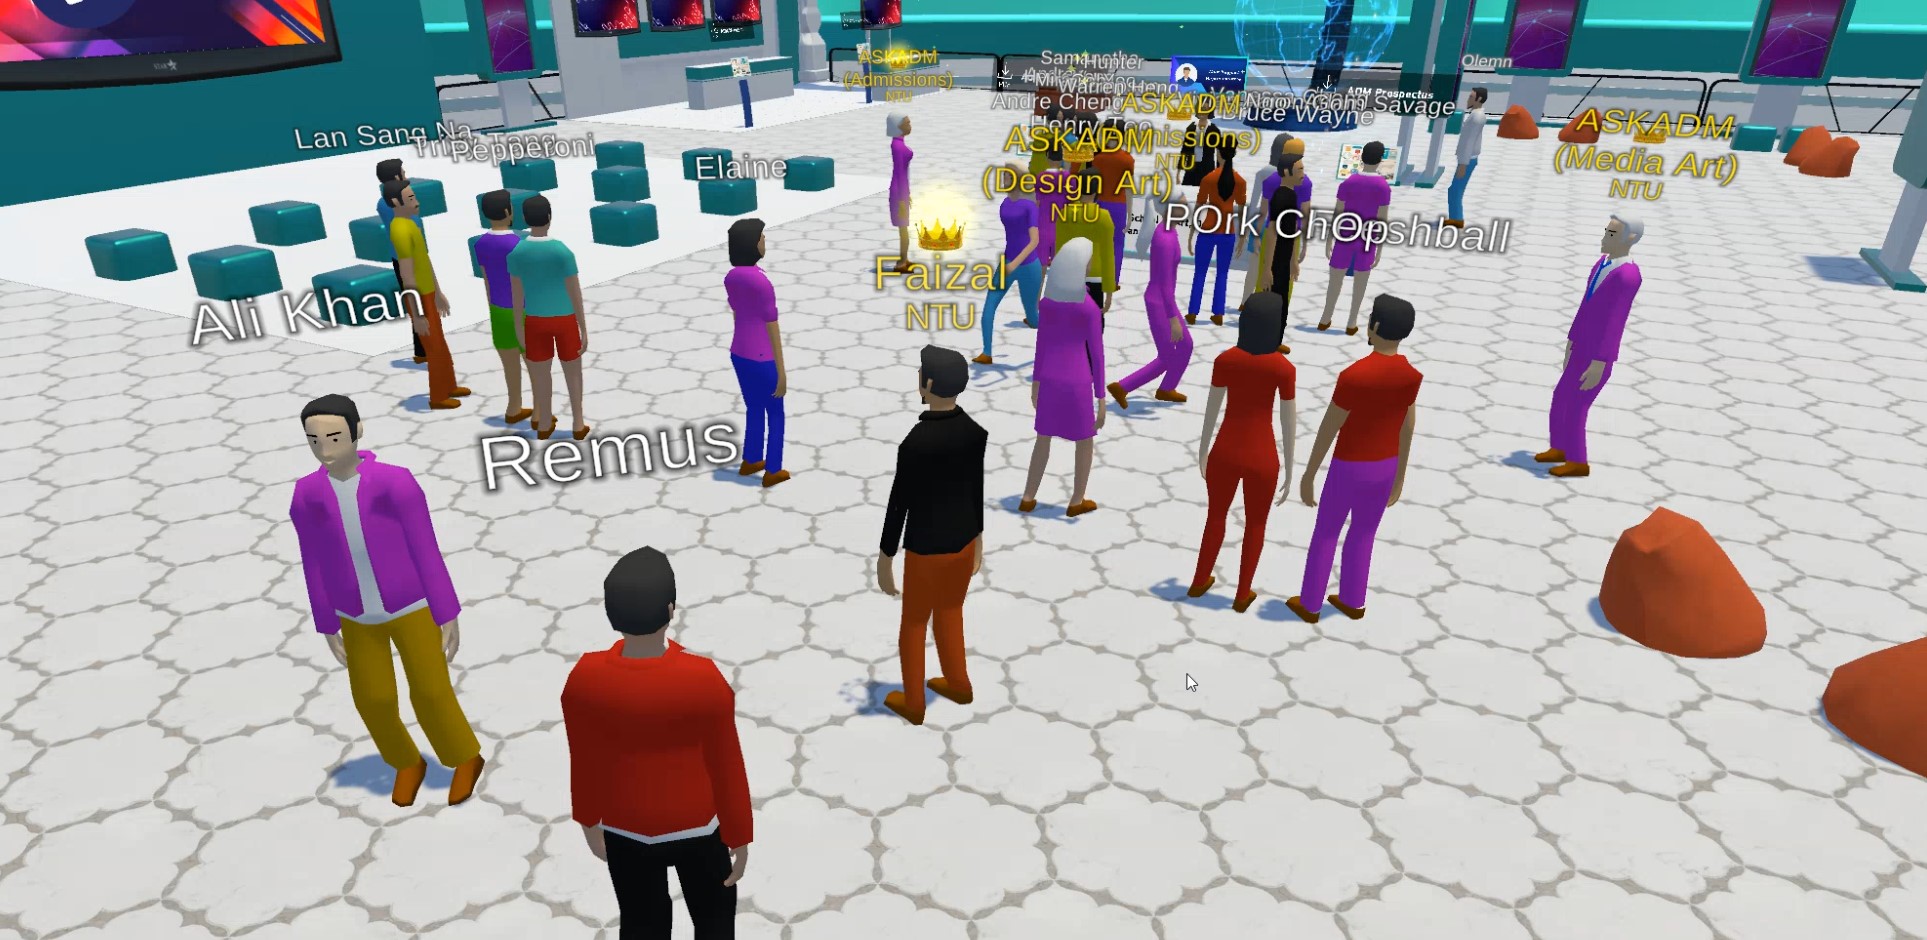 NTU Open House Metaverse Screenshot of users in the lobby area